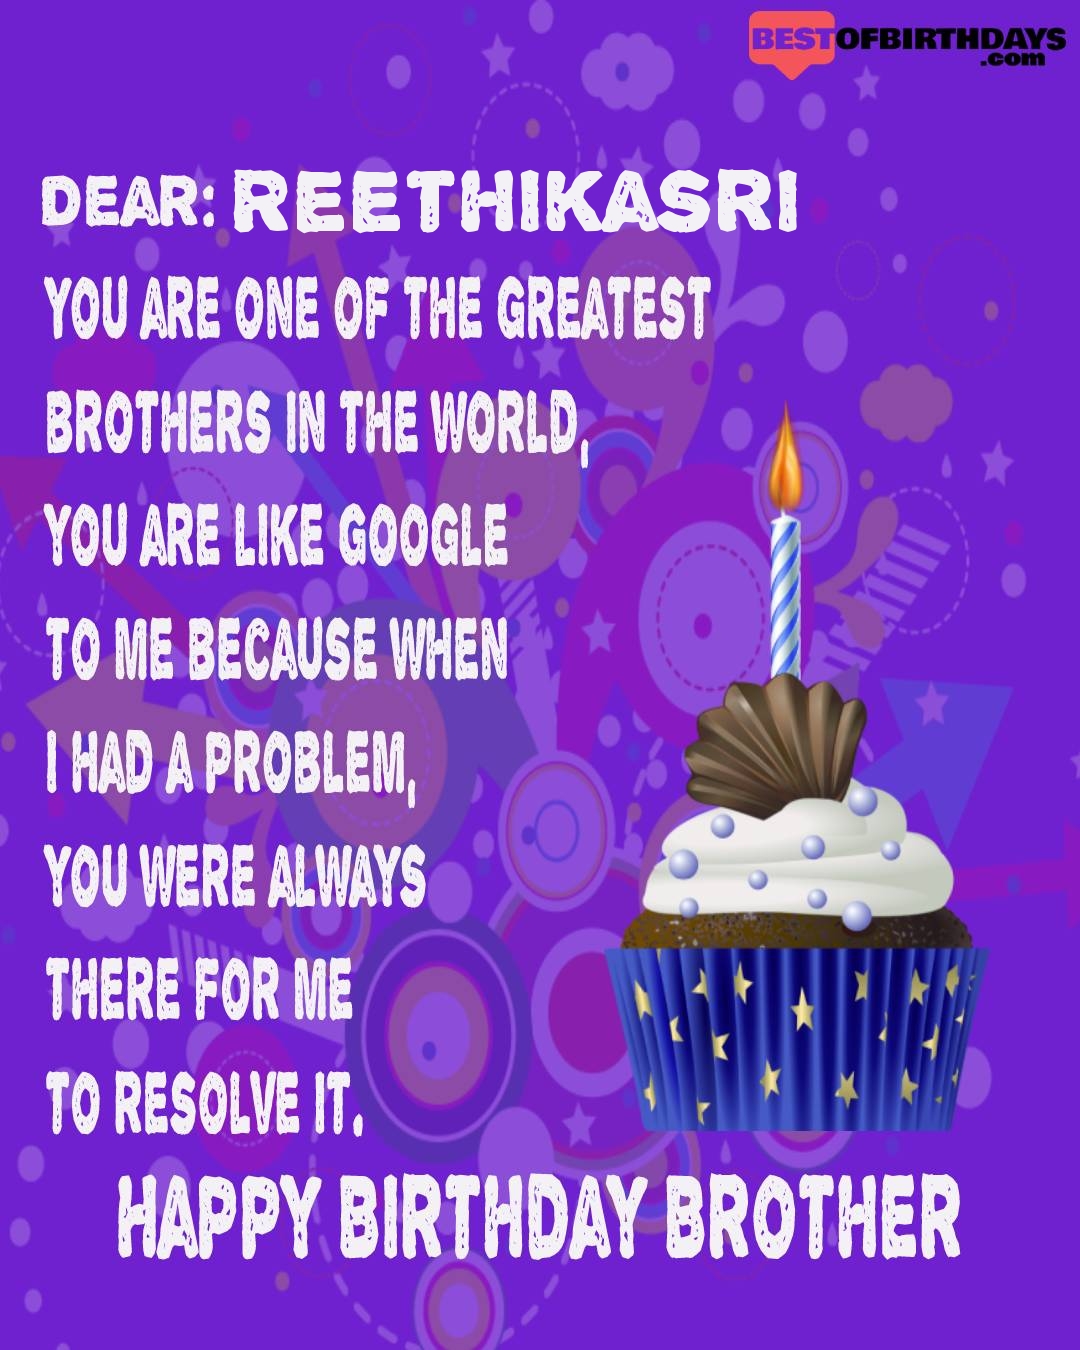 Happy birthday reethikasri bhai brother bro